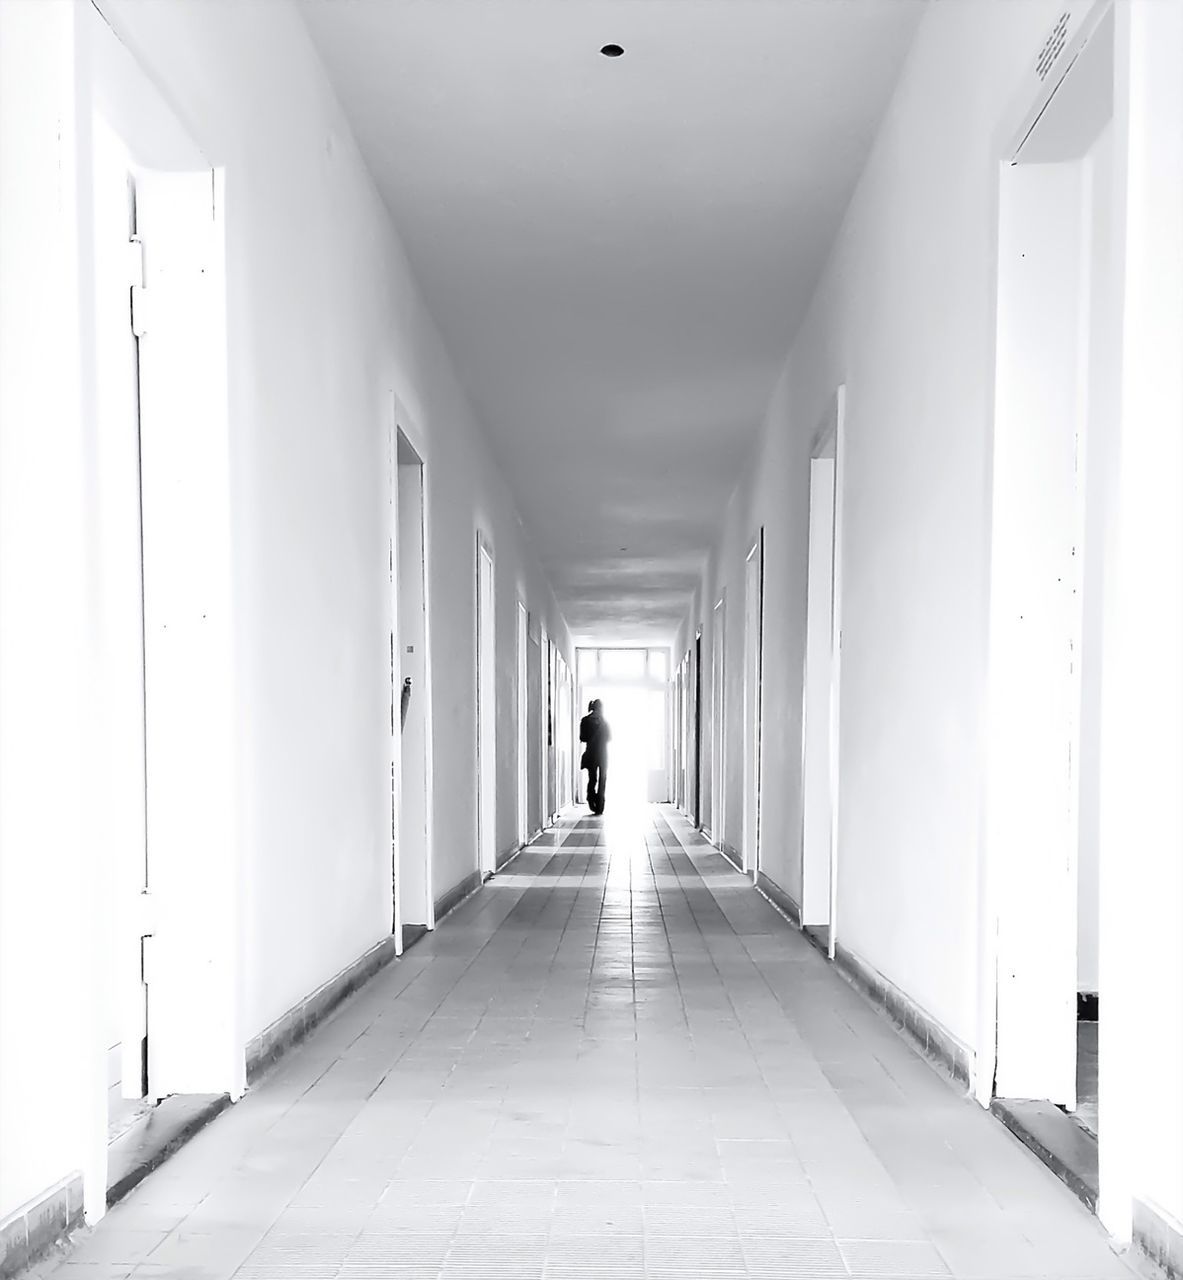 Silhouette of man in corridor